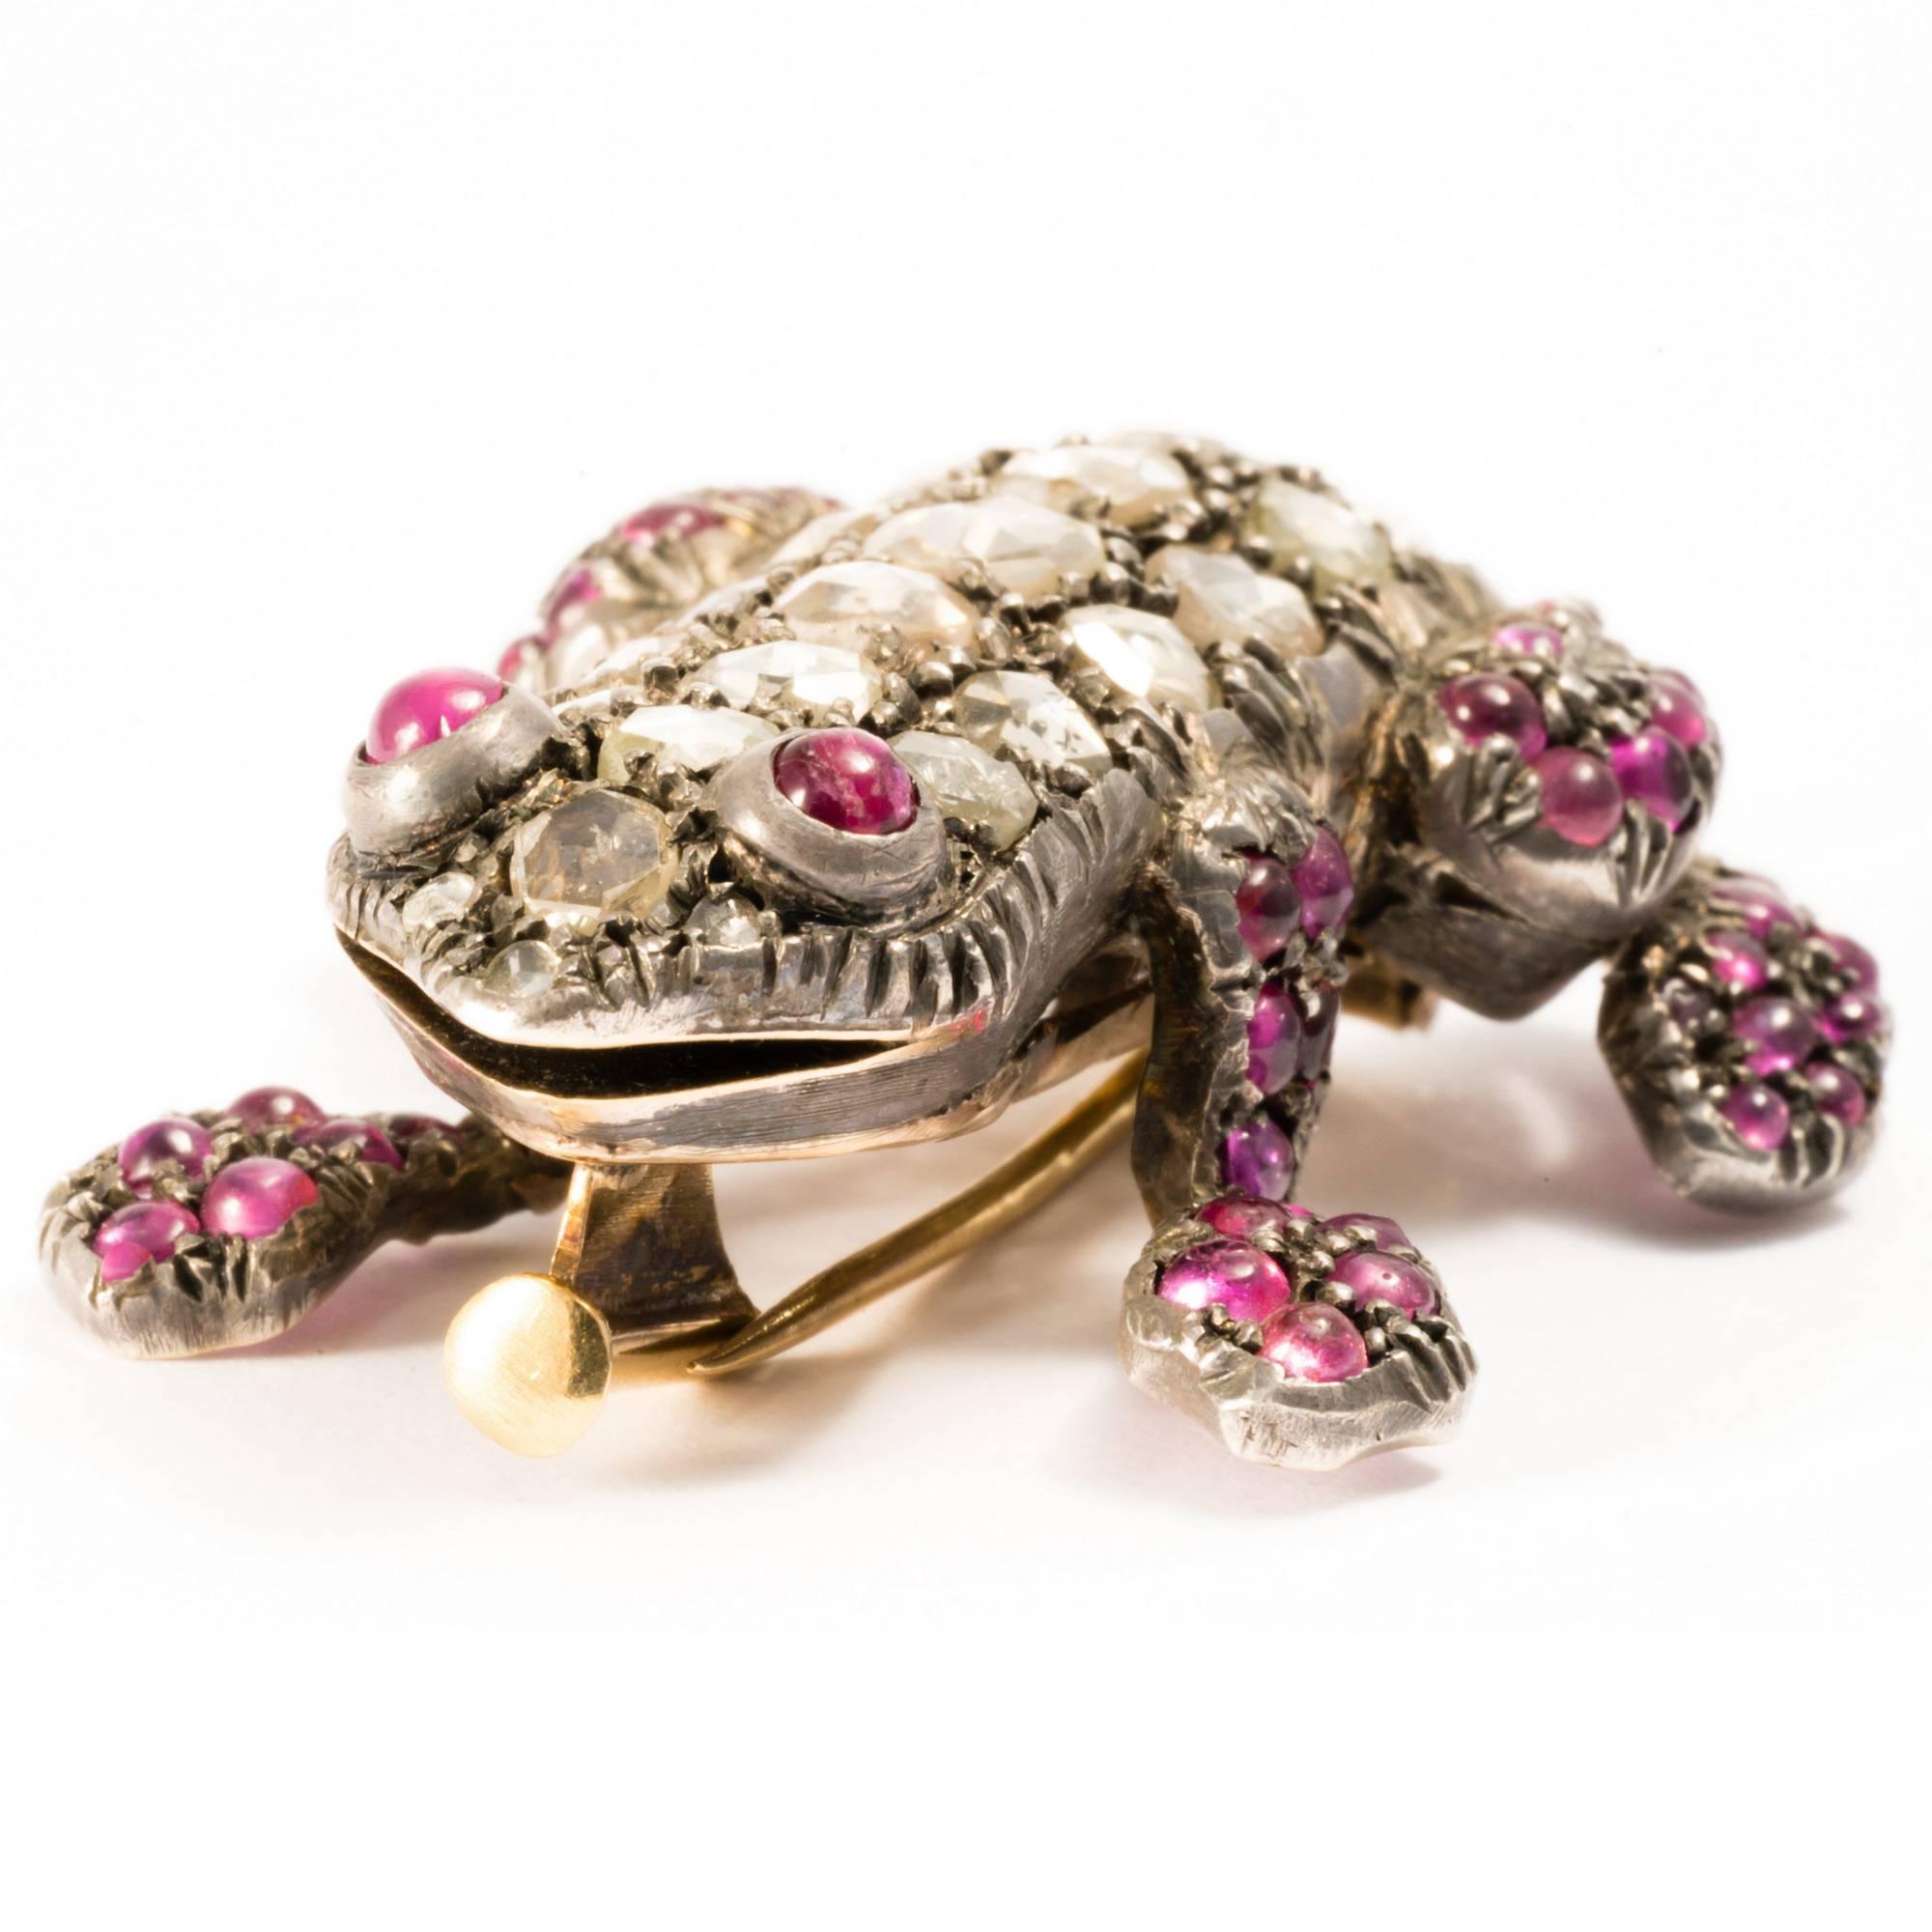 1880 Antique Symbol Rose Cut Diamonds and Rubies Frog Necklace Enhancer Brooch  2